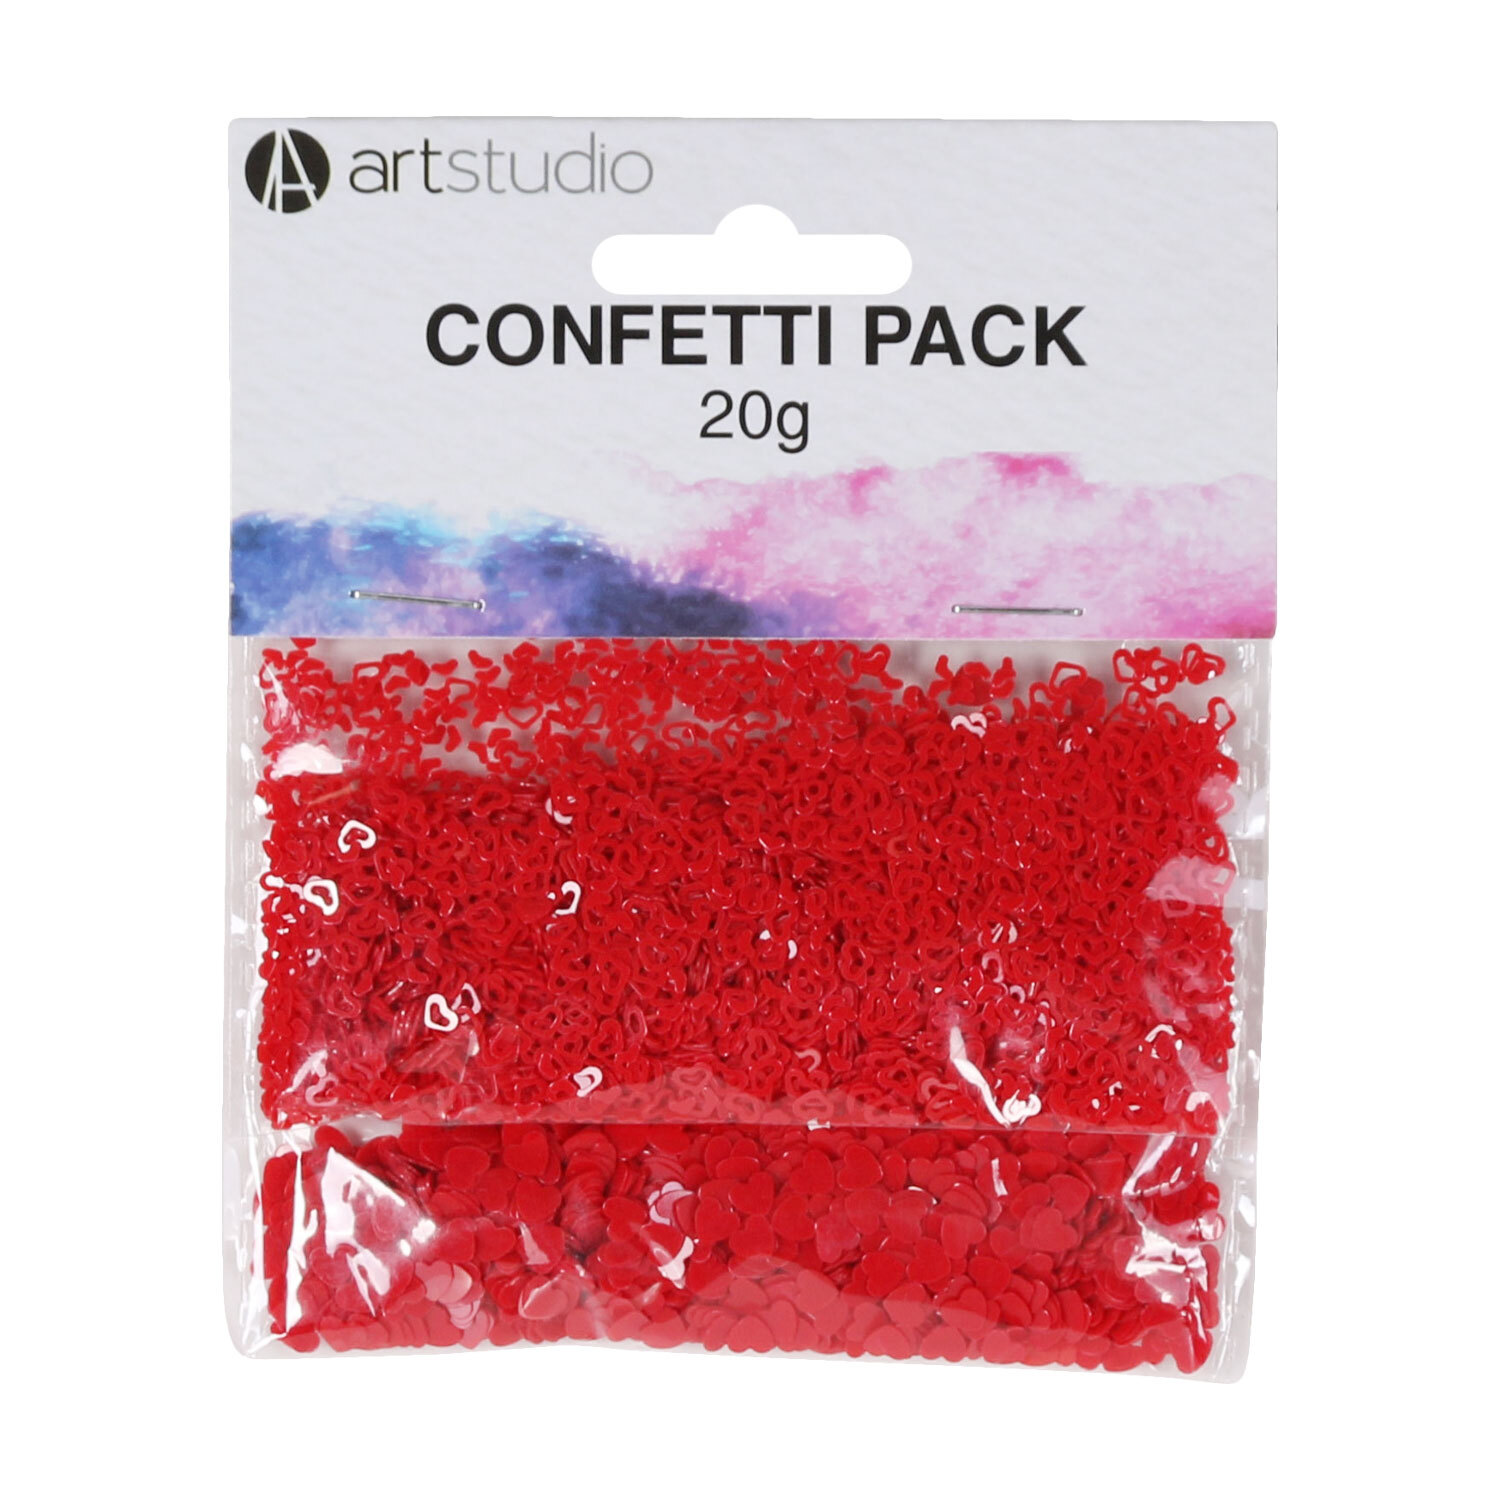 Art Studio Confetti Pack 20g Image 2